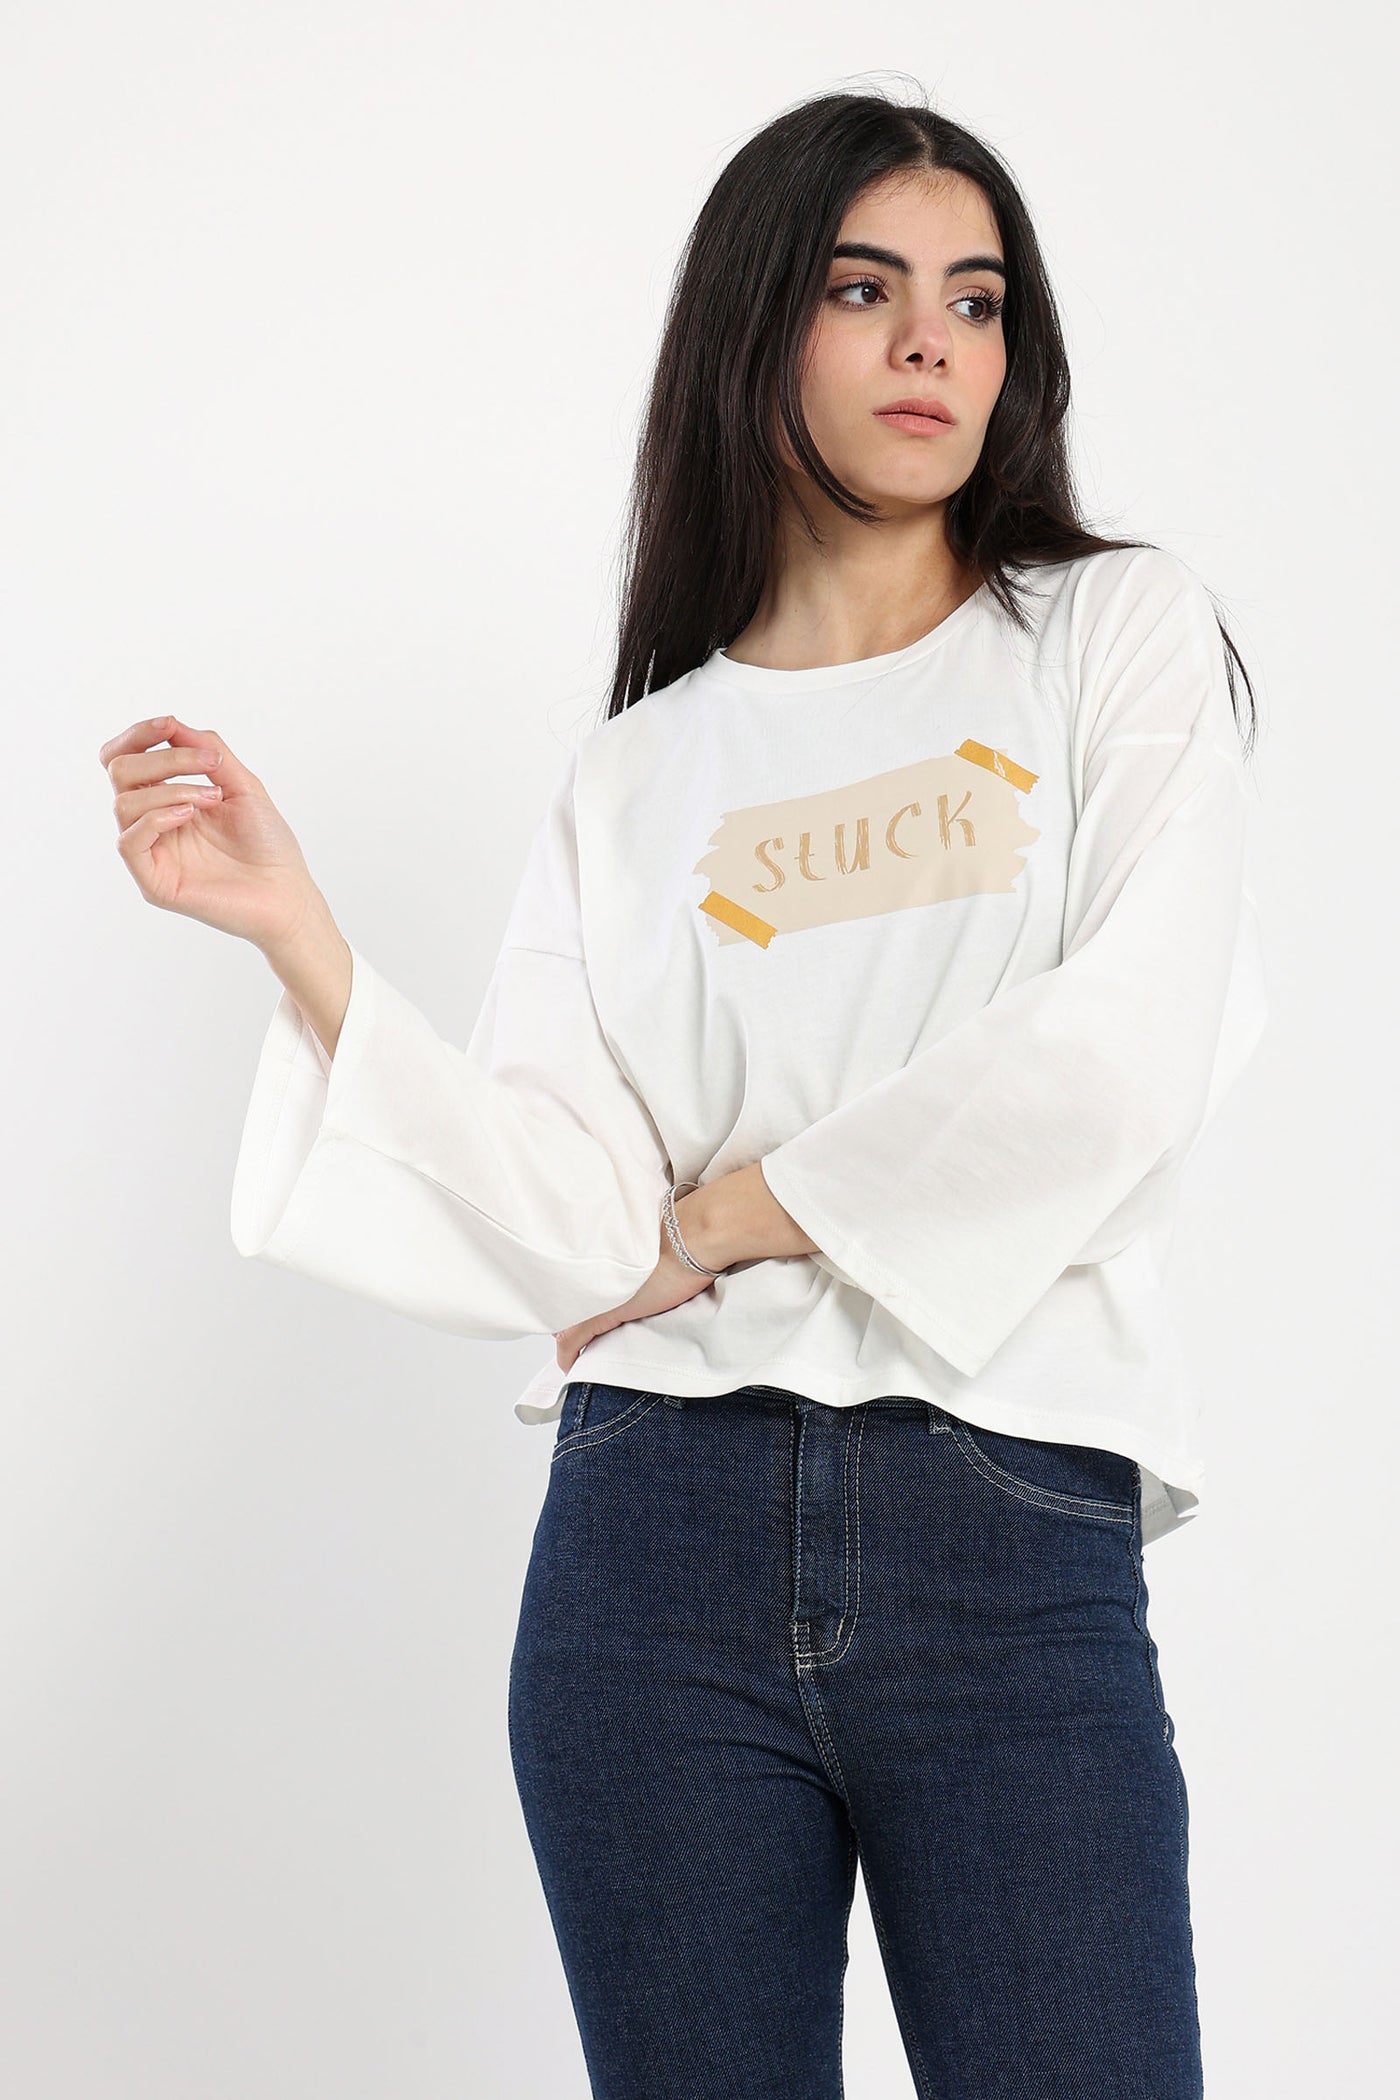 T-Shirt - "Stuck" Front Print - Dipped Hem